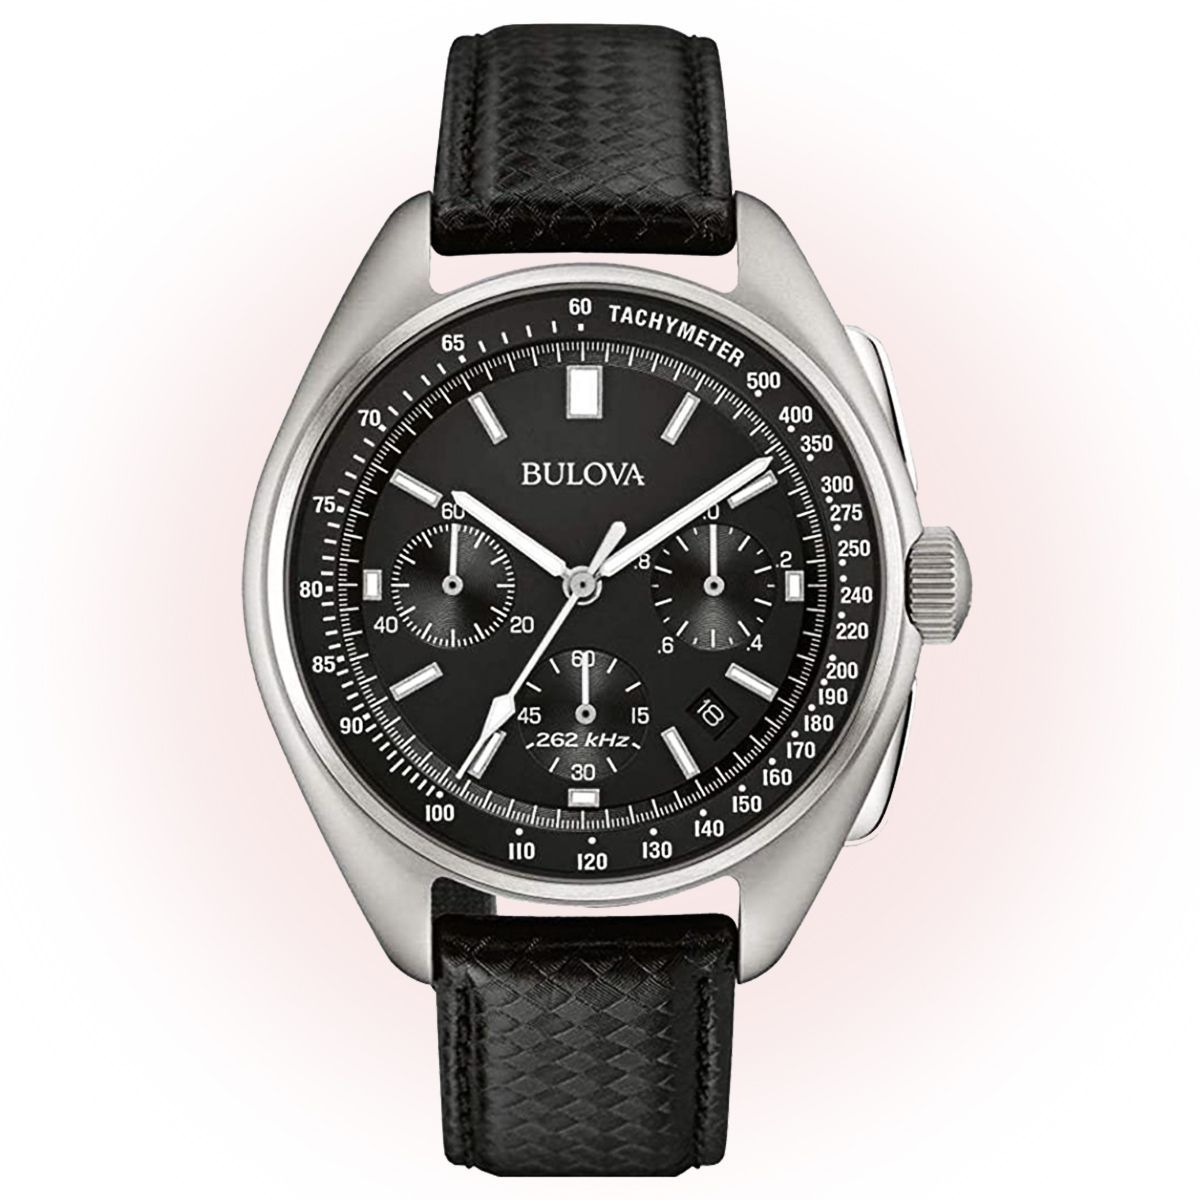 Bulova Lunar Pilot Chronograph Watch